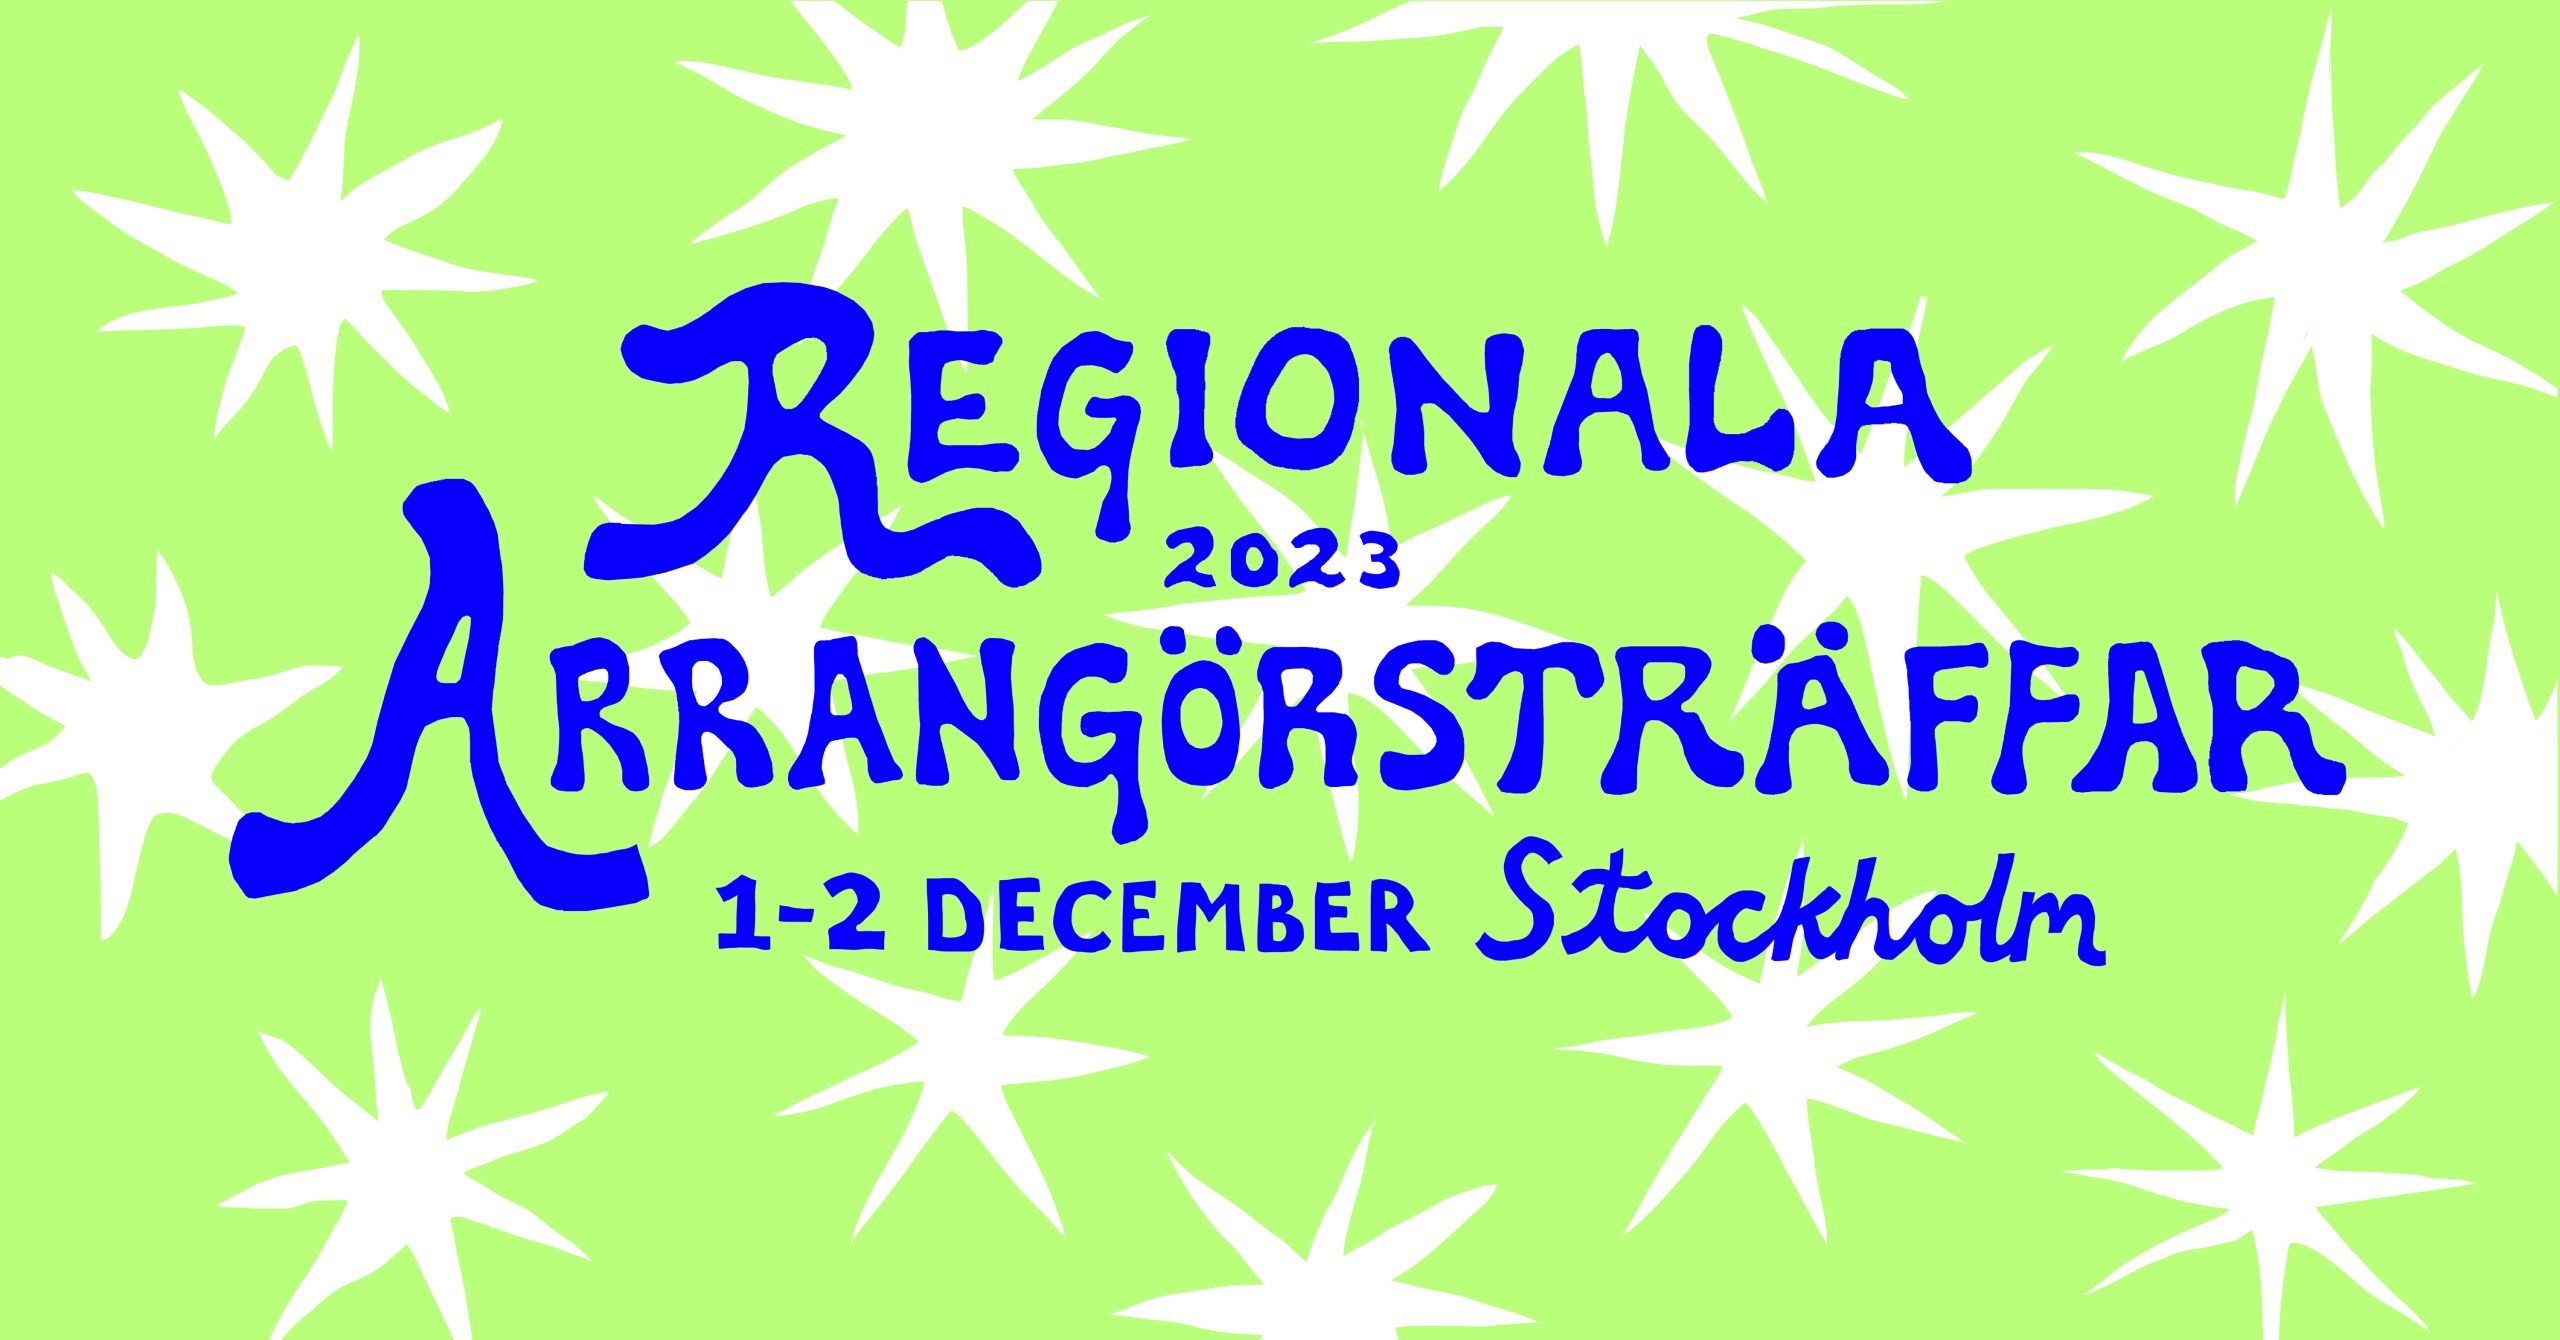 Arrangörsträff i Stockholm 1-2 december